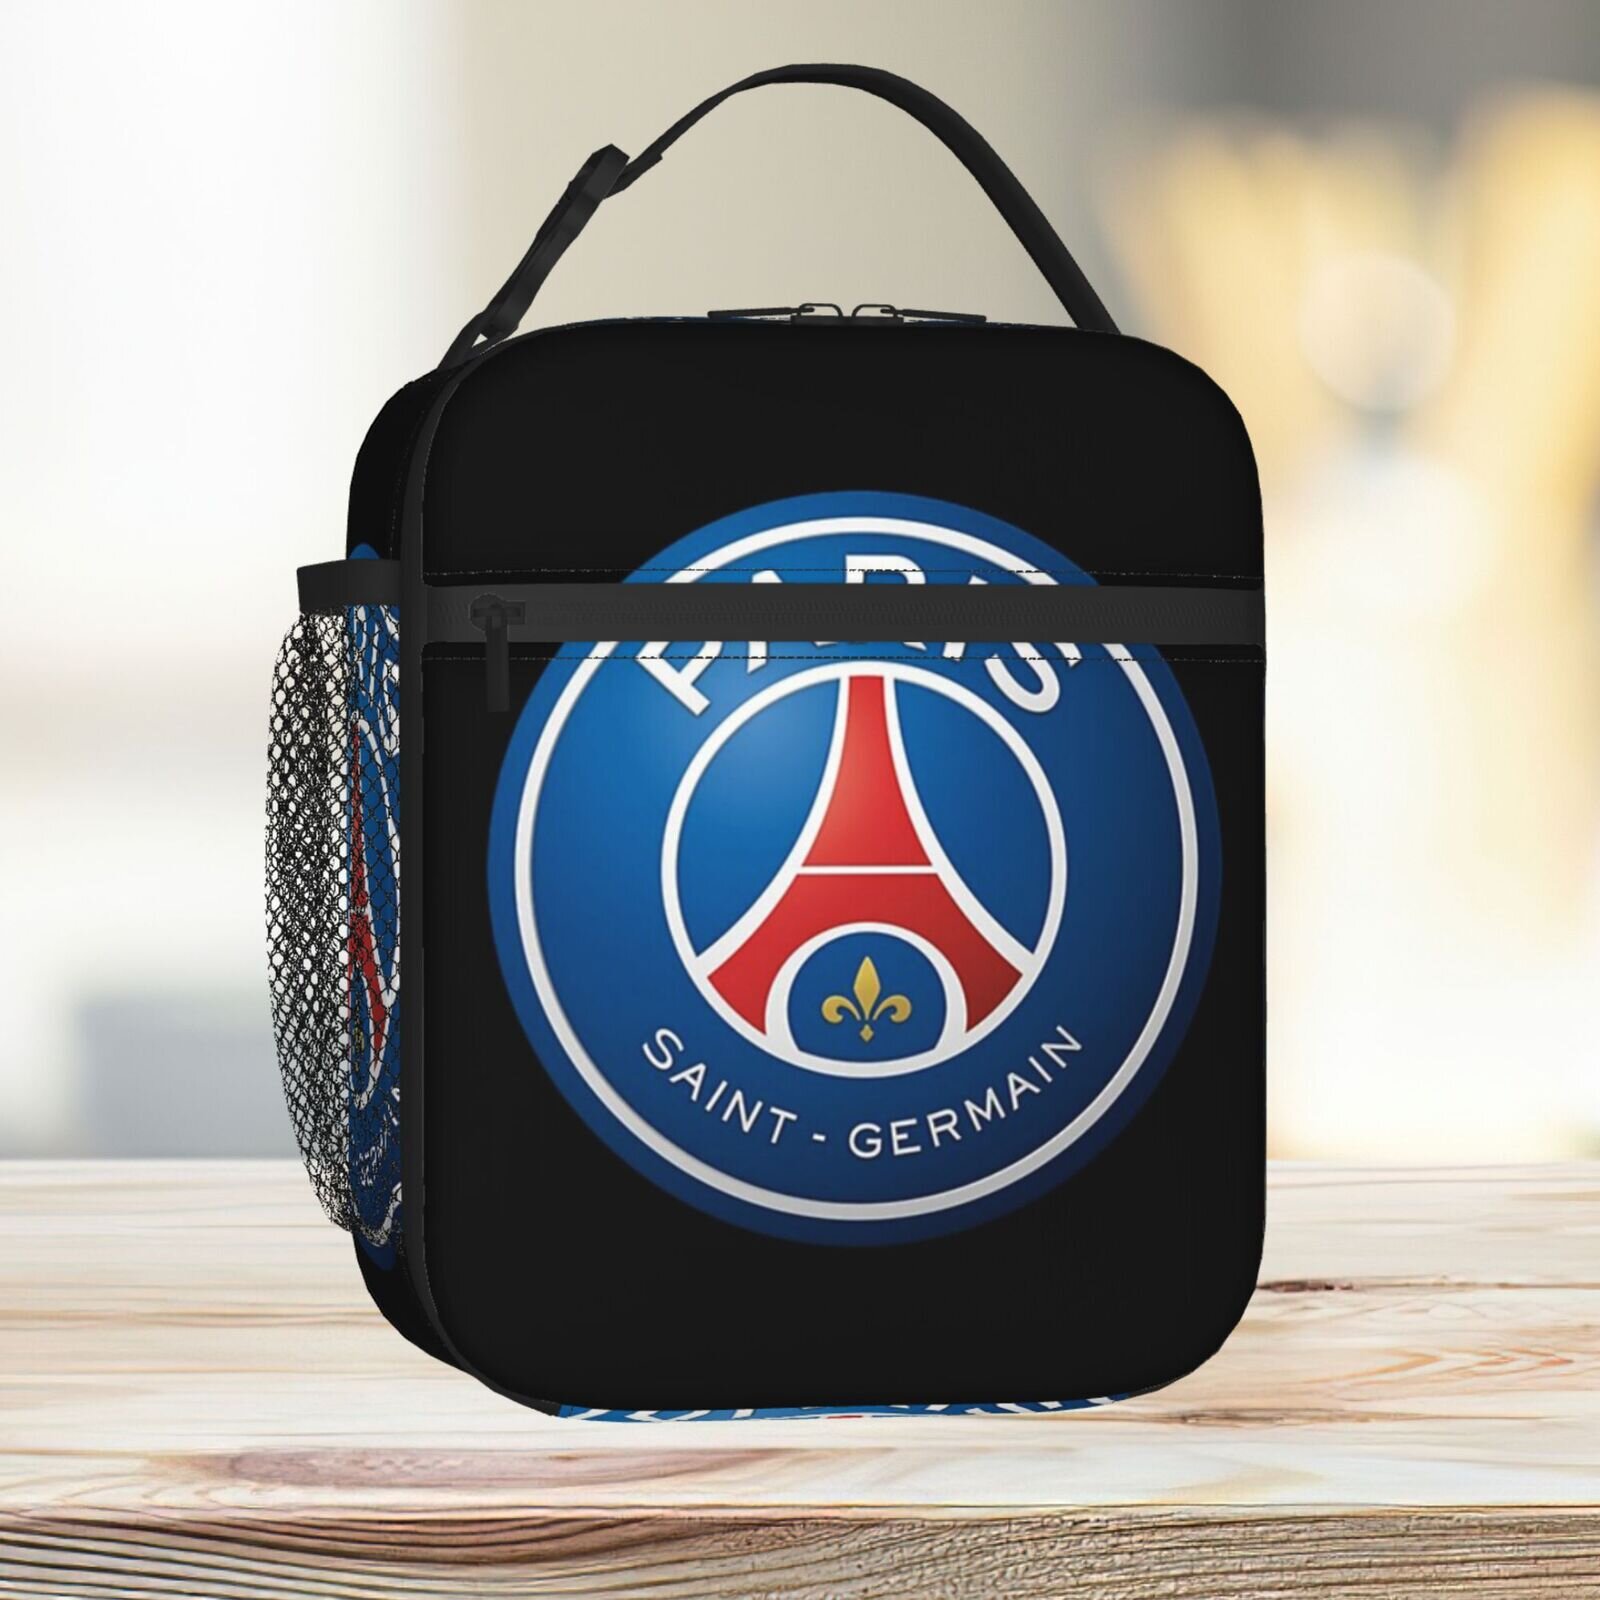 Lunch Bag Paris Saint Germain #22 Tote Insulated Cooler Kids School Travel